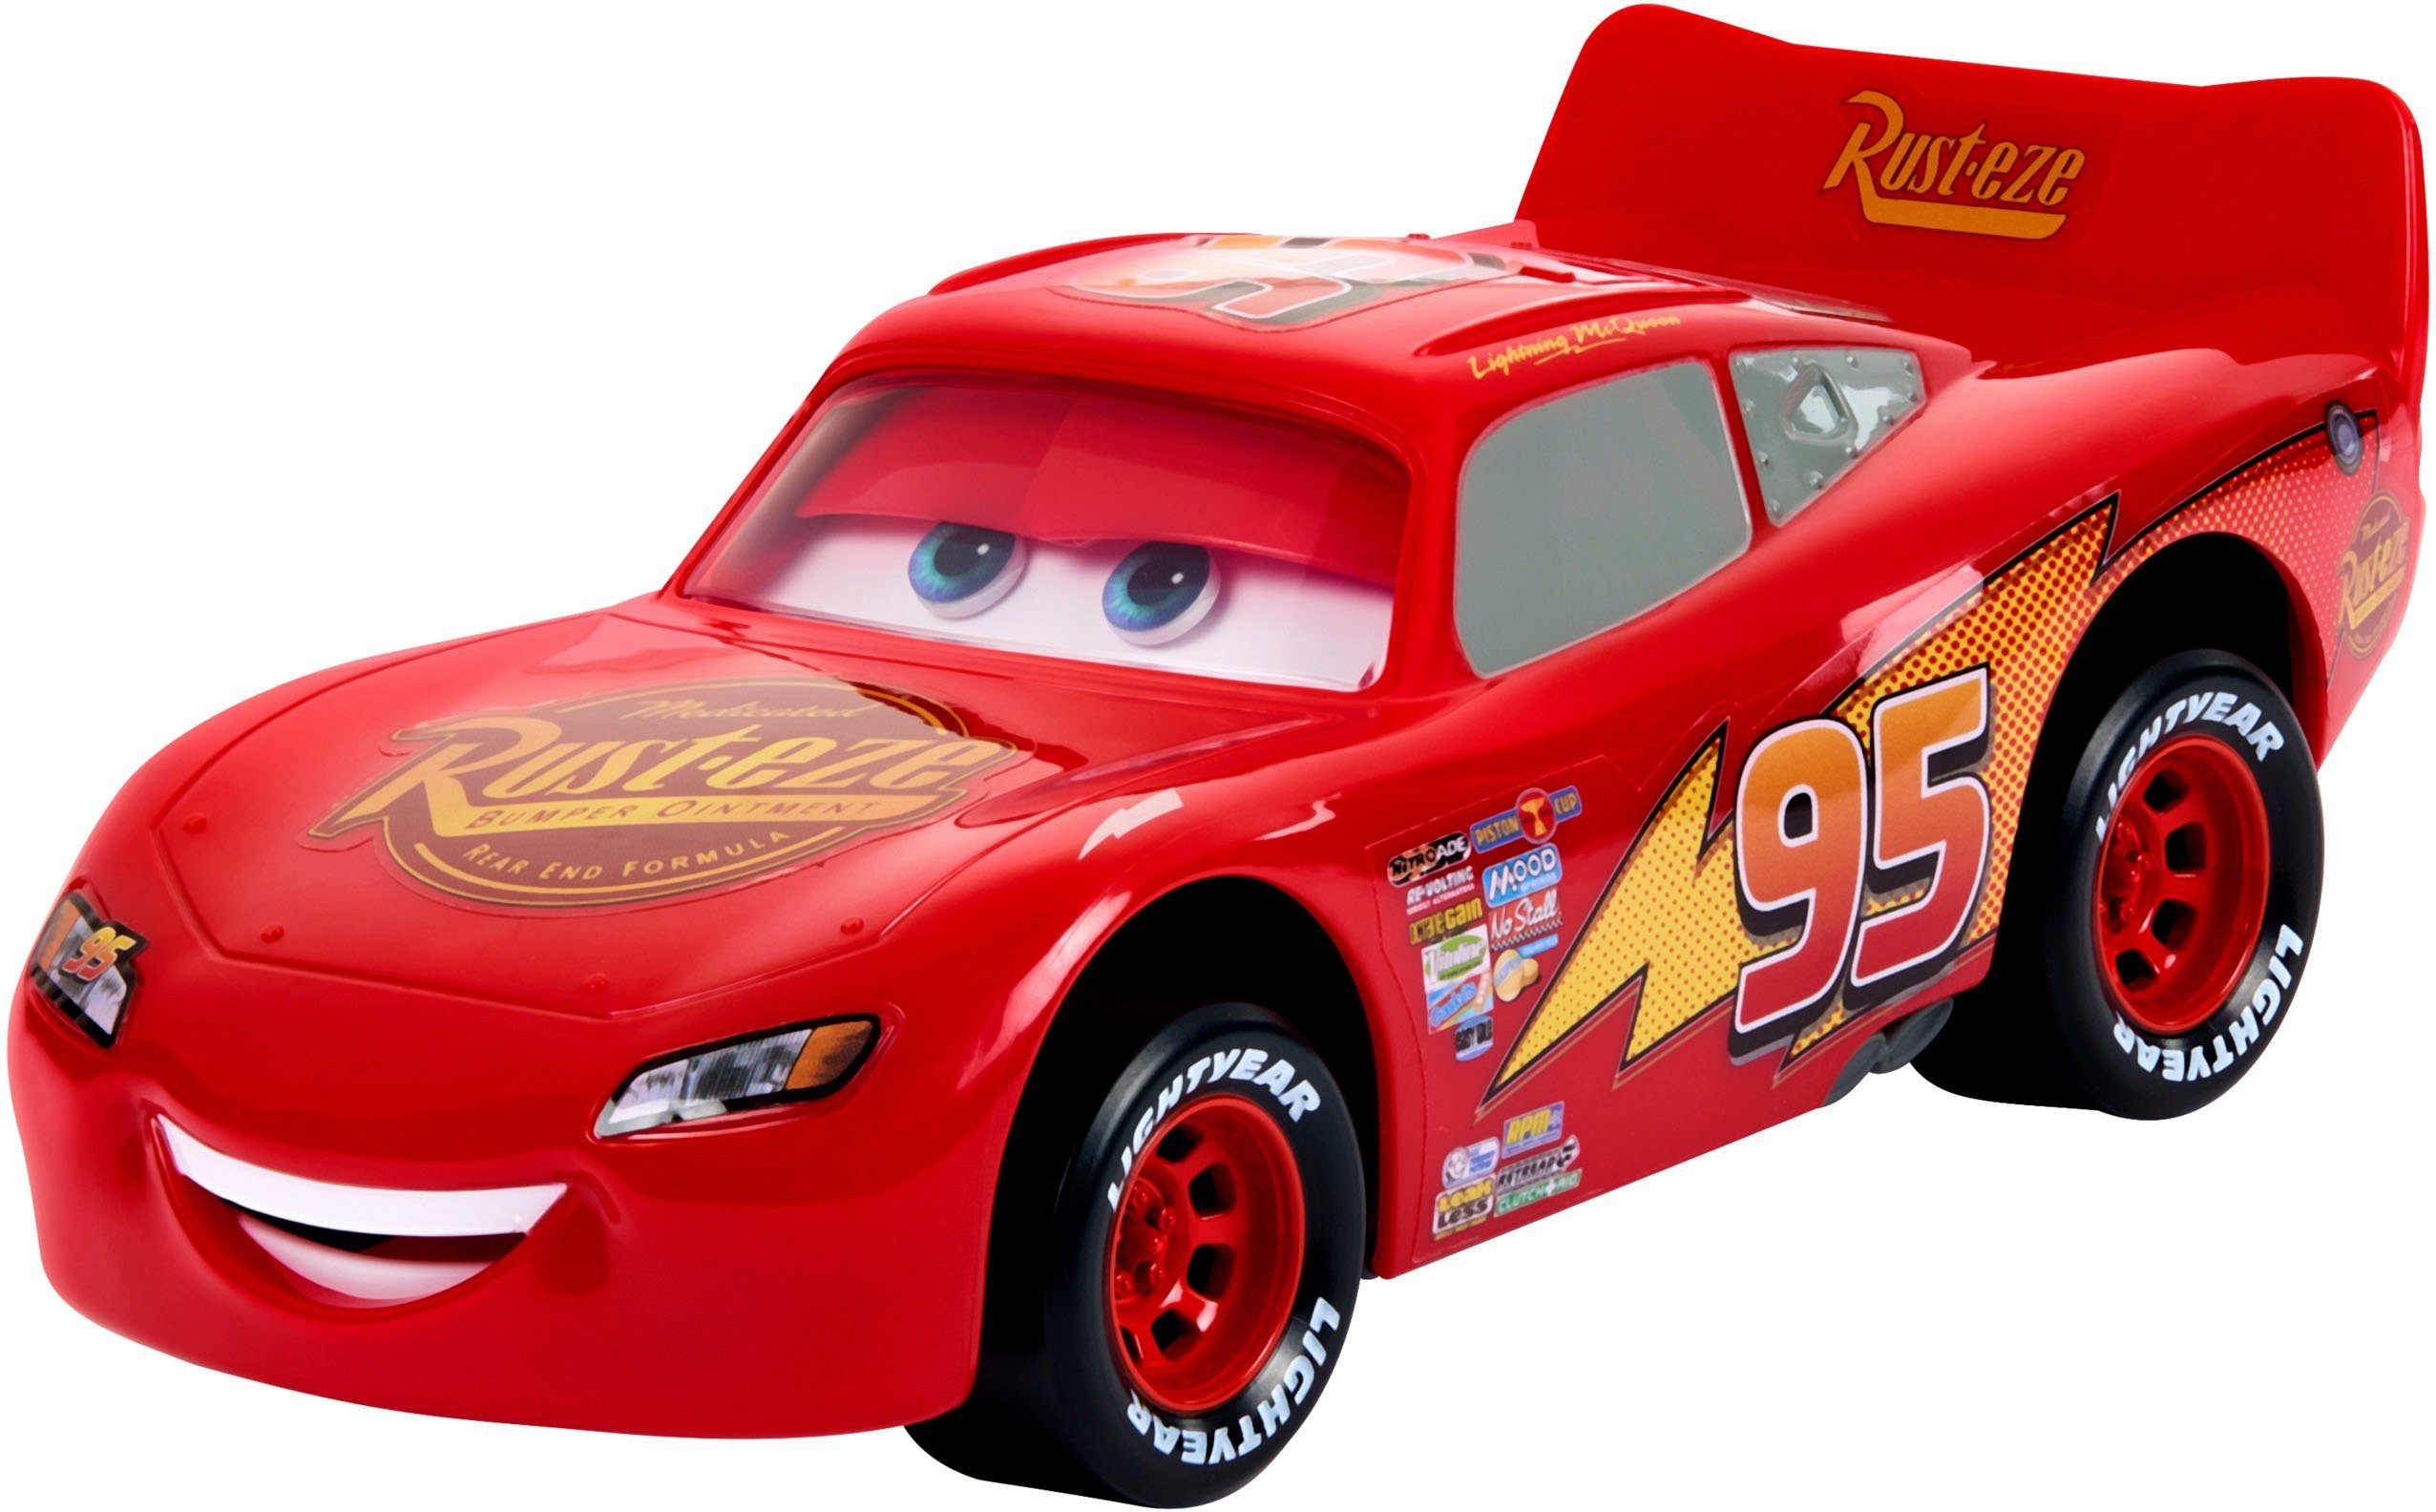 Pixar Moving Mattel® Disney Cars Moments McQueen Spielzeug-Auto Lightning